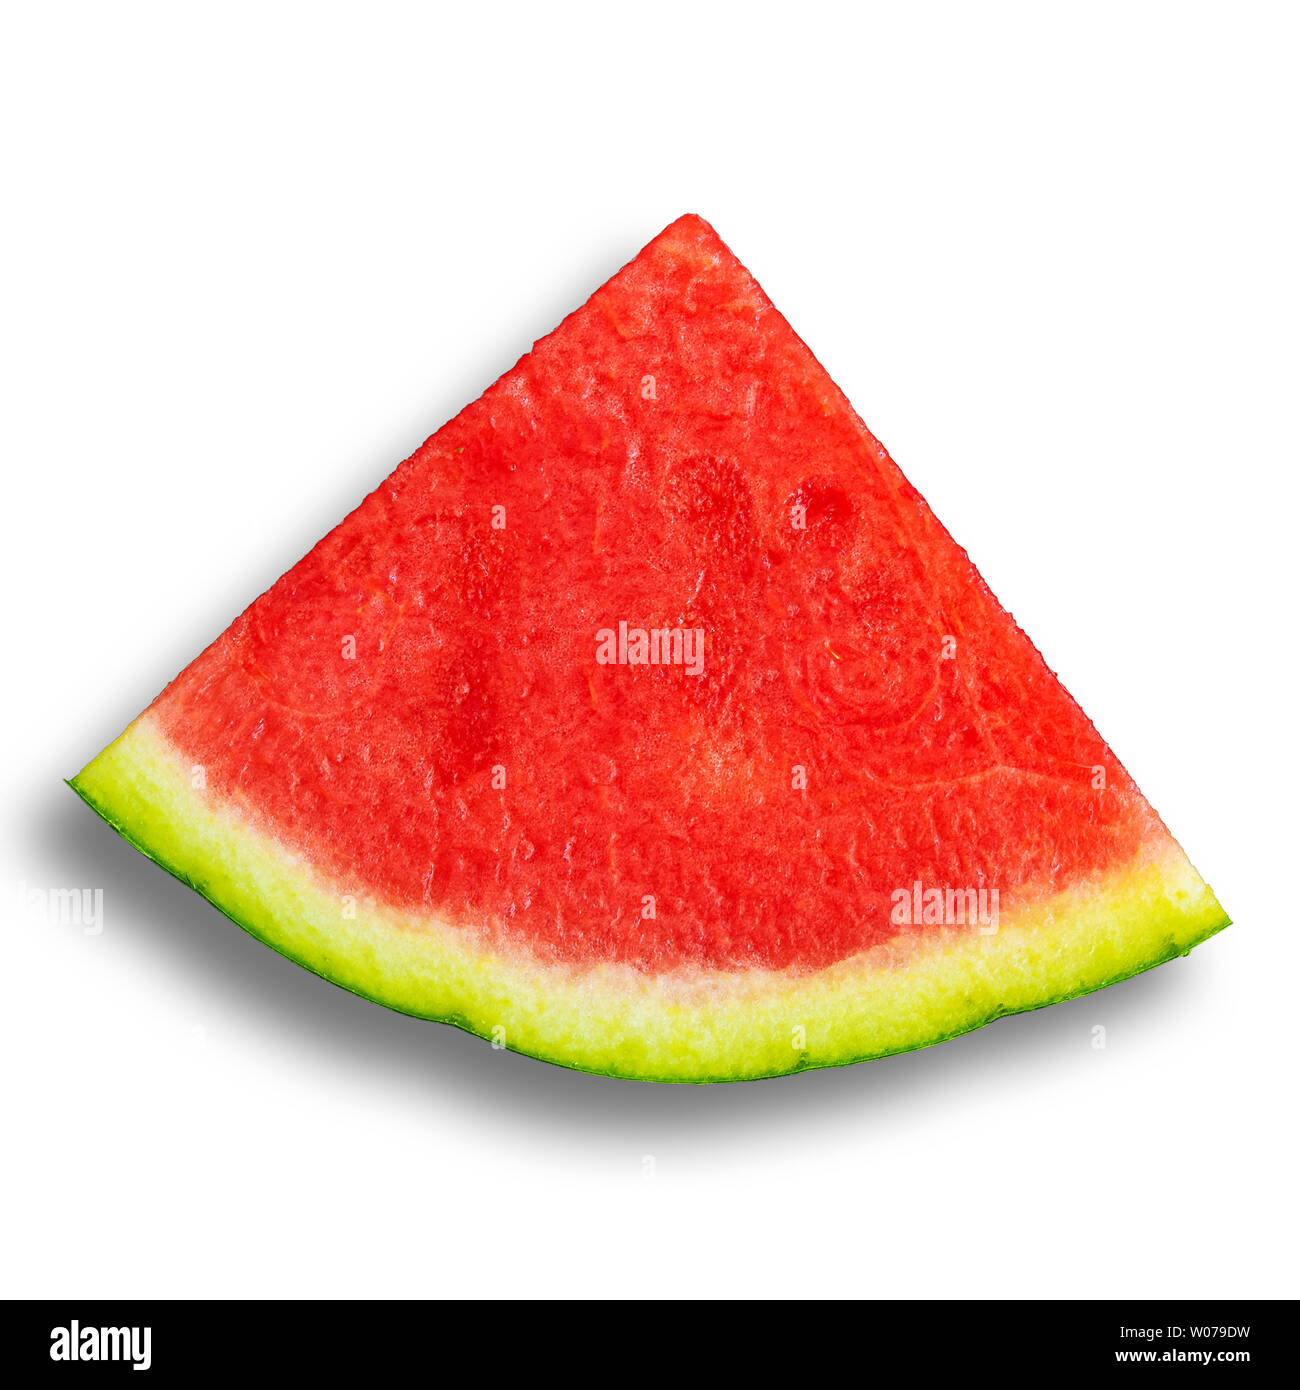 slice of fresh juicy watermelon isolated on white background Stock Photo